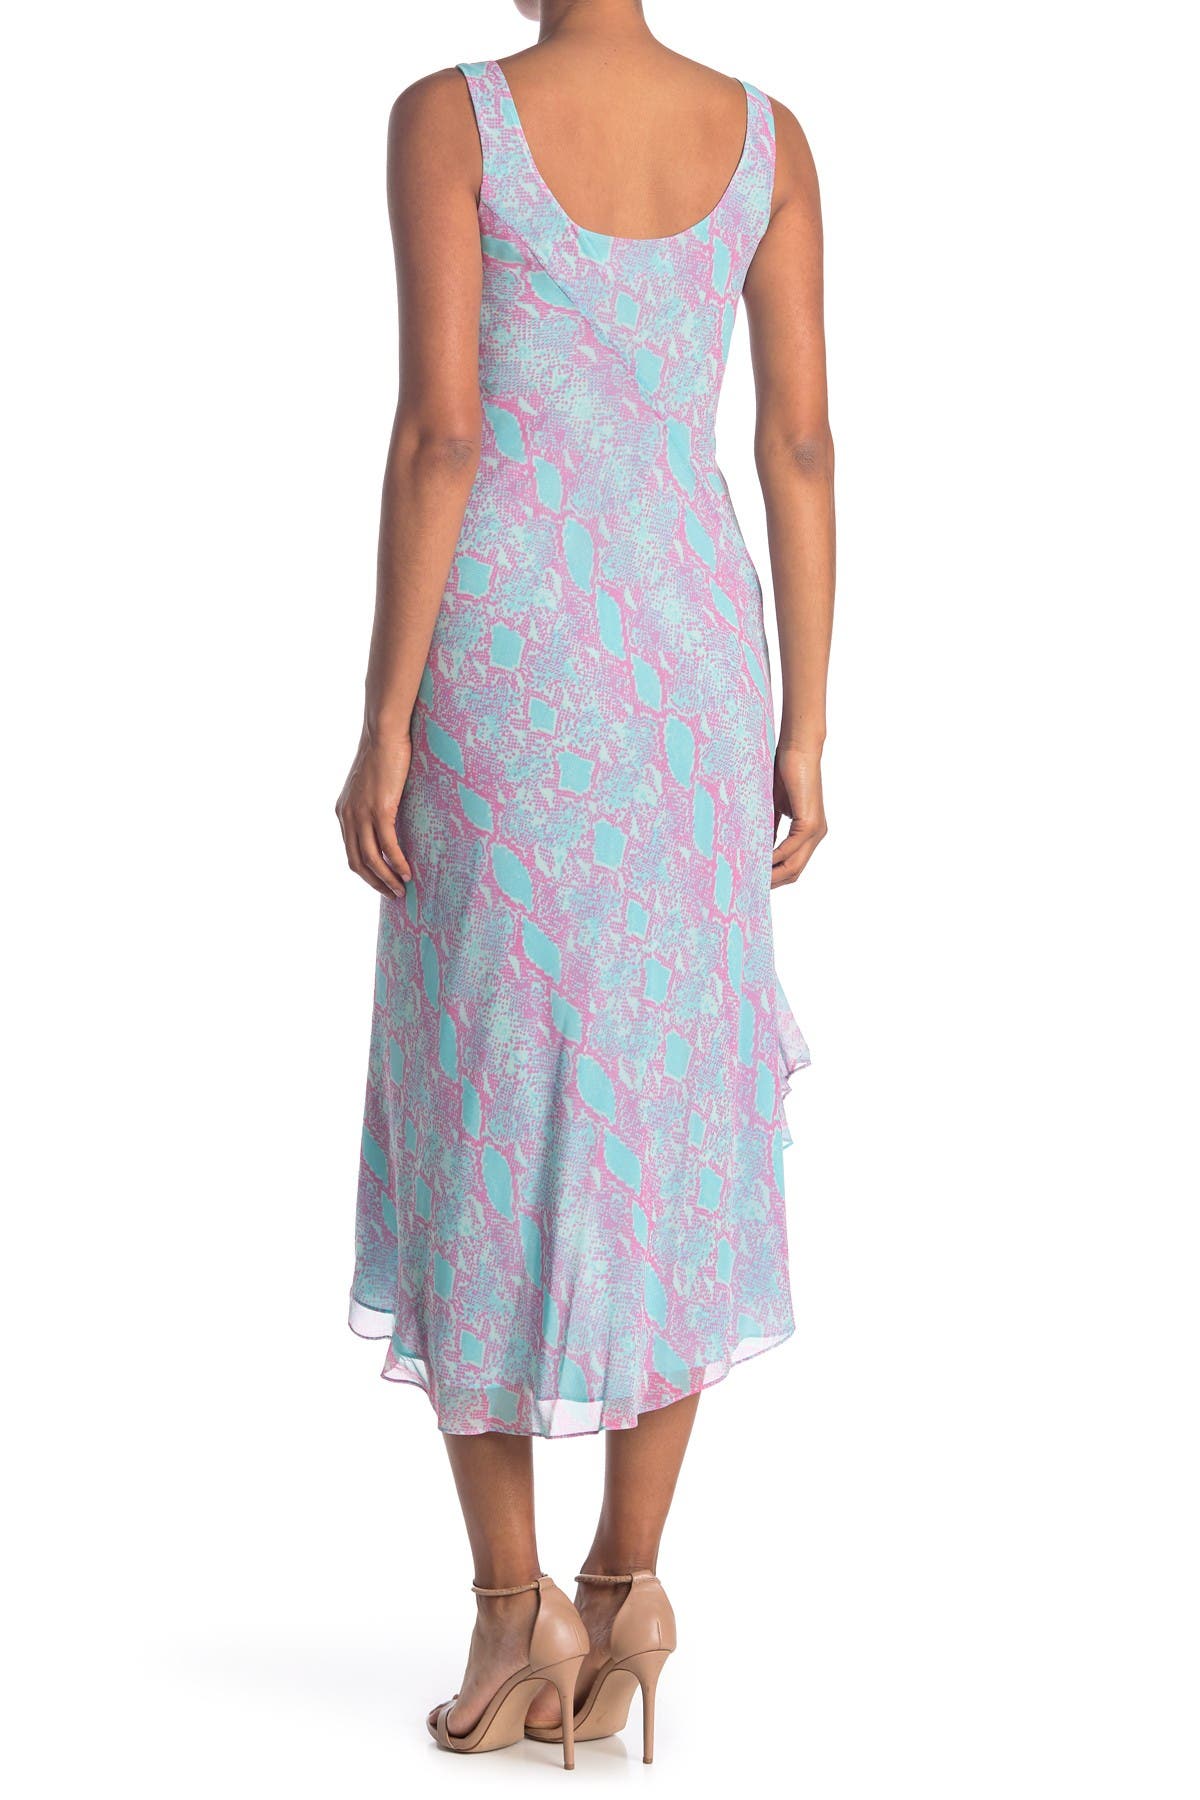 Diane Von Furstenberg Talia Asymmetrical Patterned Dress In Open Miscellaneous2